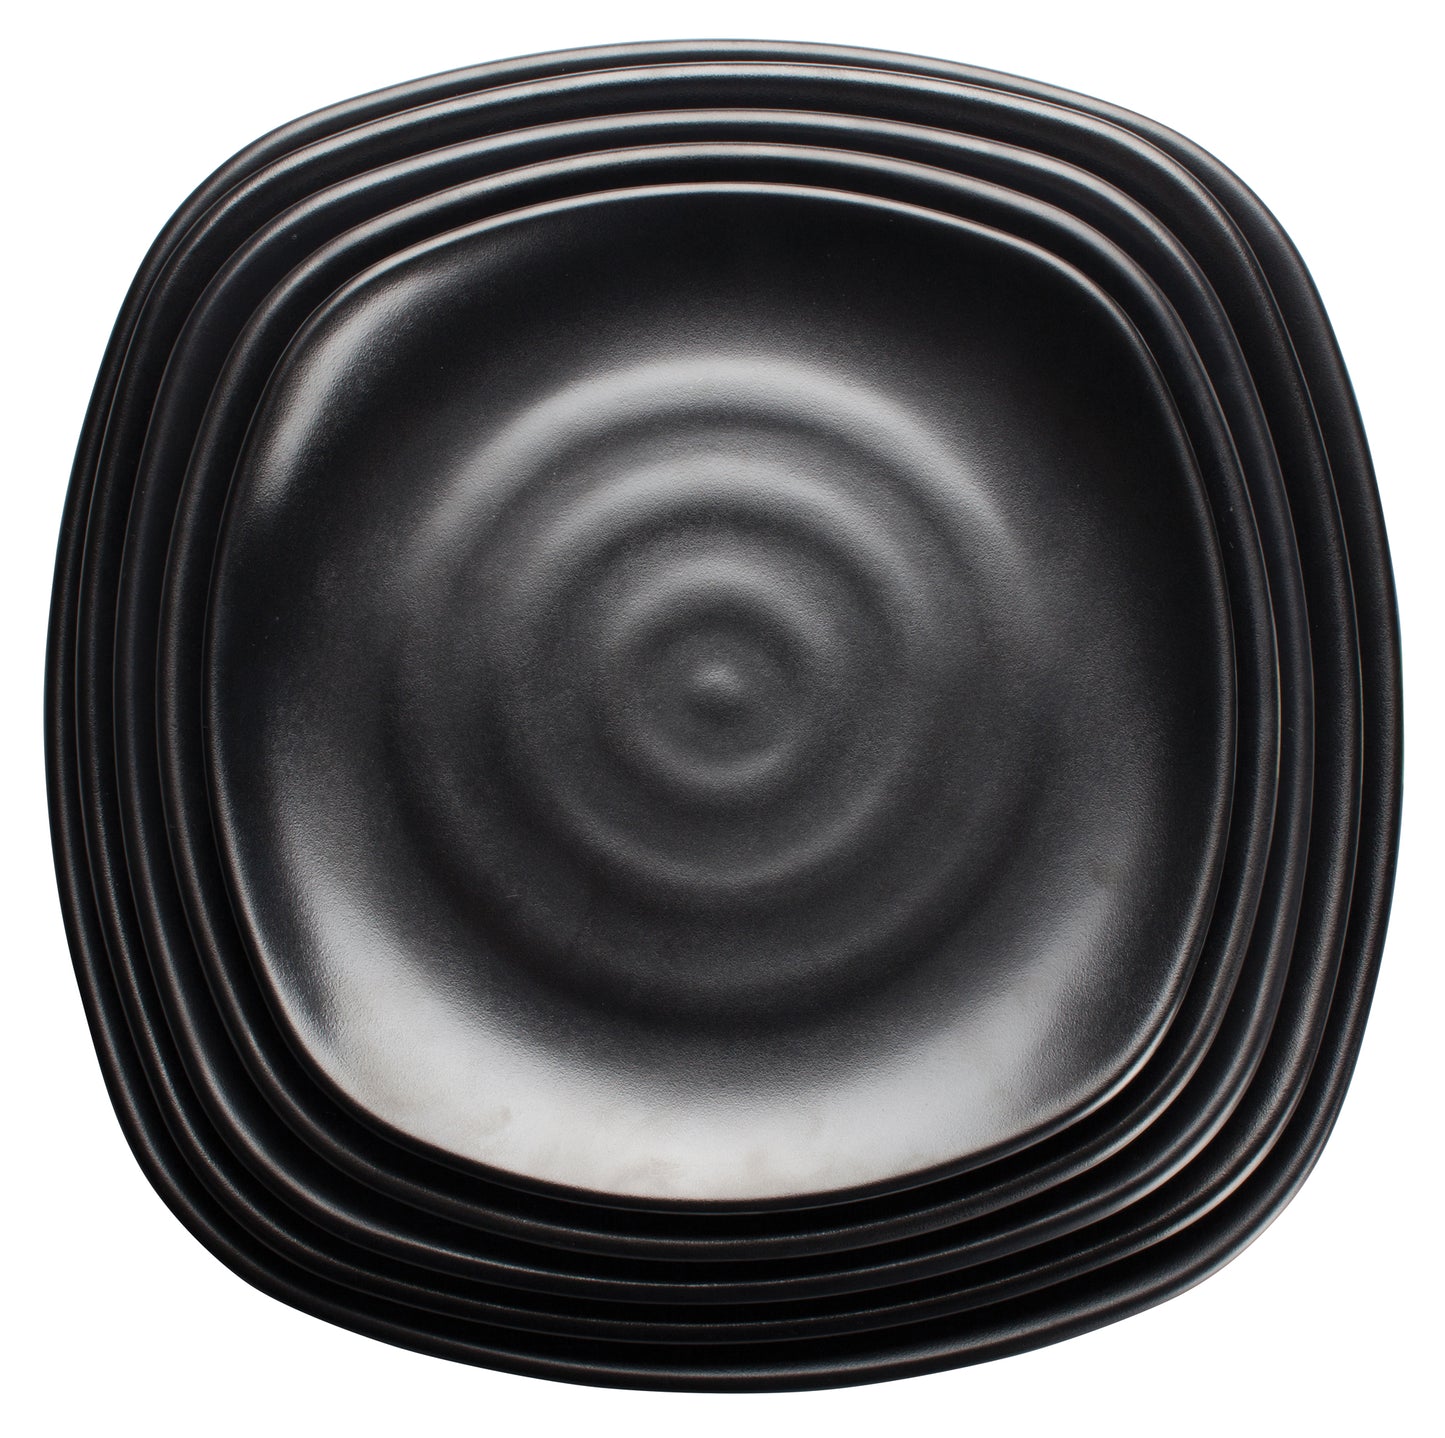 WDM013-303 - 10-3/4" Melamine Square Plate, Black, 24pcs/case